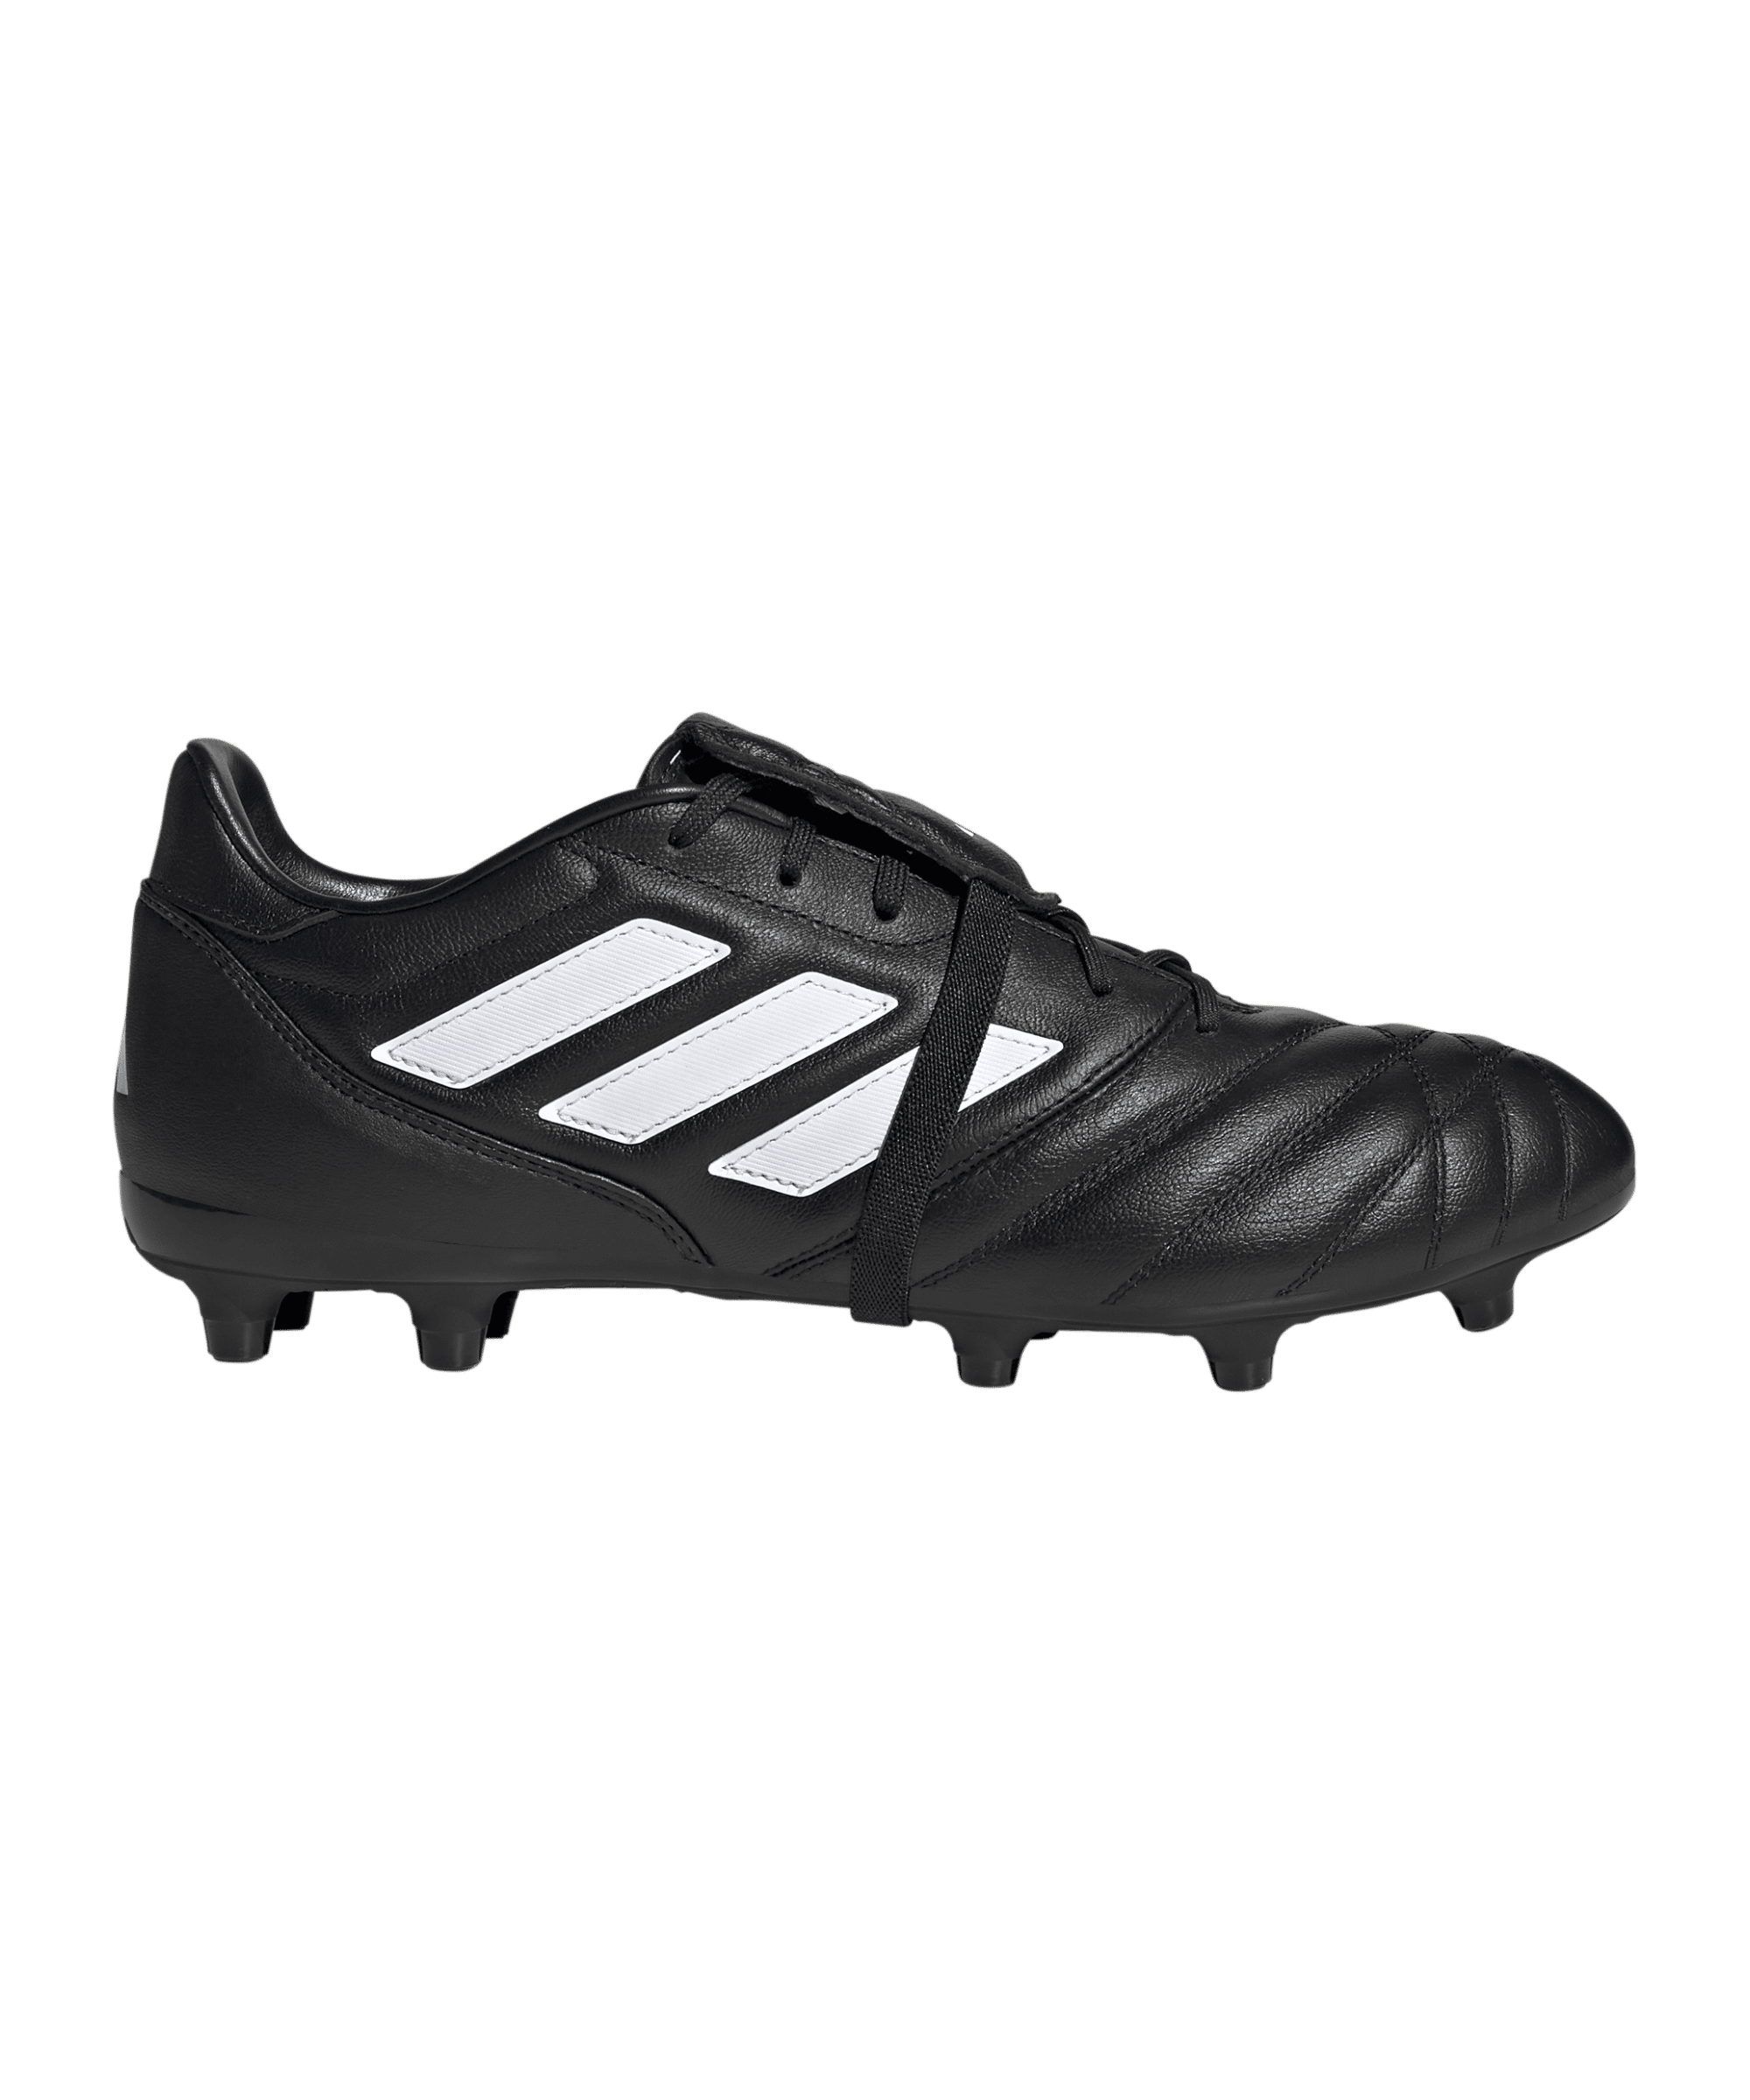 Adidas Fussballschuh COPA Gloro FG schwarz weiß